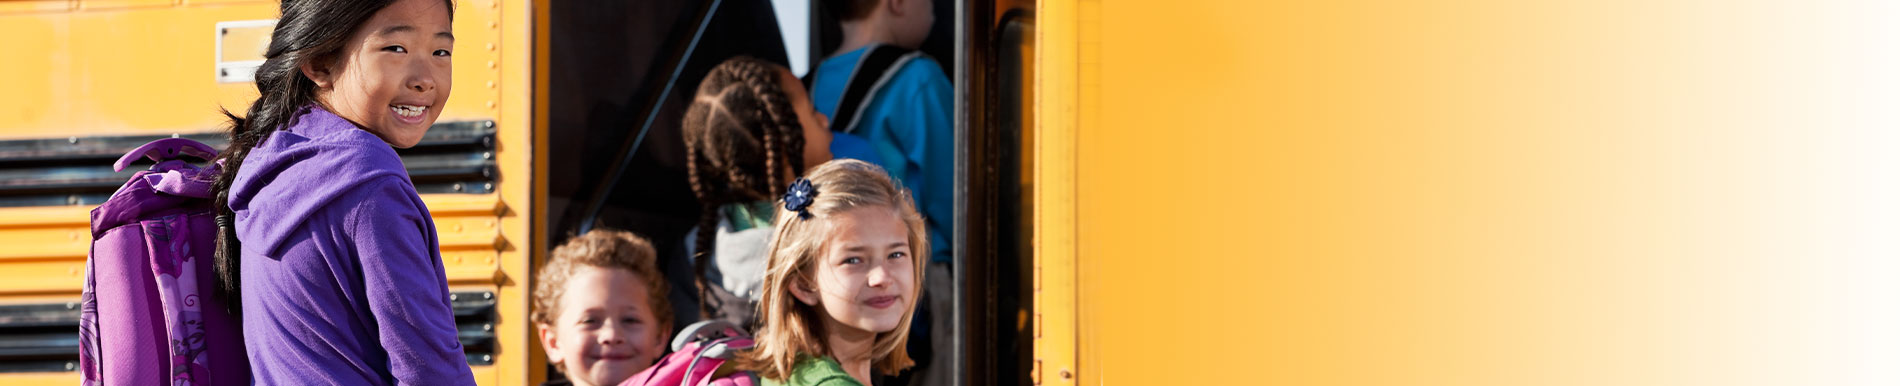 https://www.healthychildren.org/SiteCollectionImage-Homepage-Banners/back-to-school-banner-bus.jpg